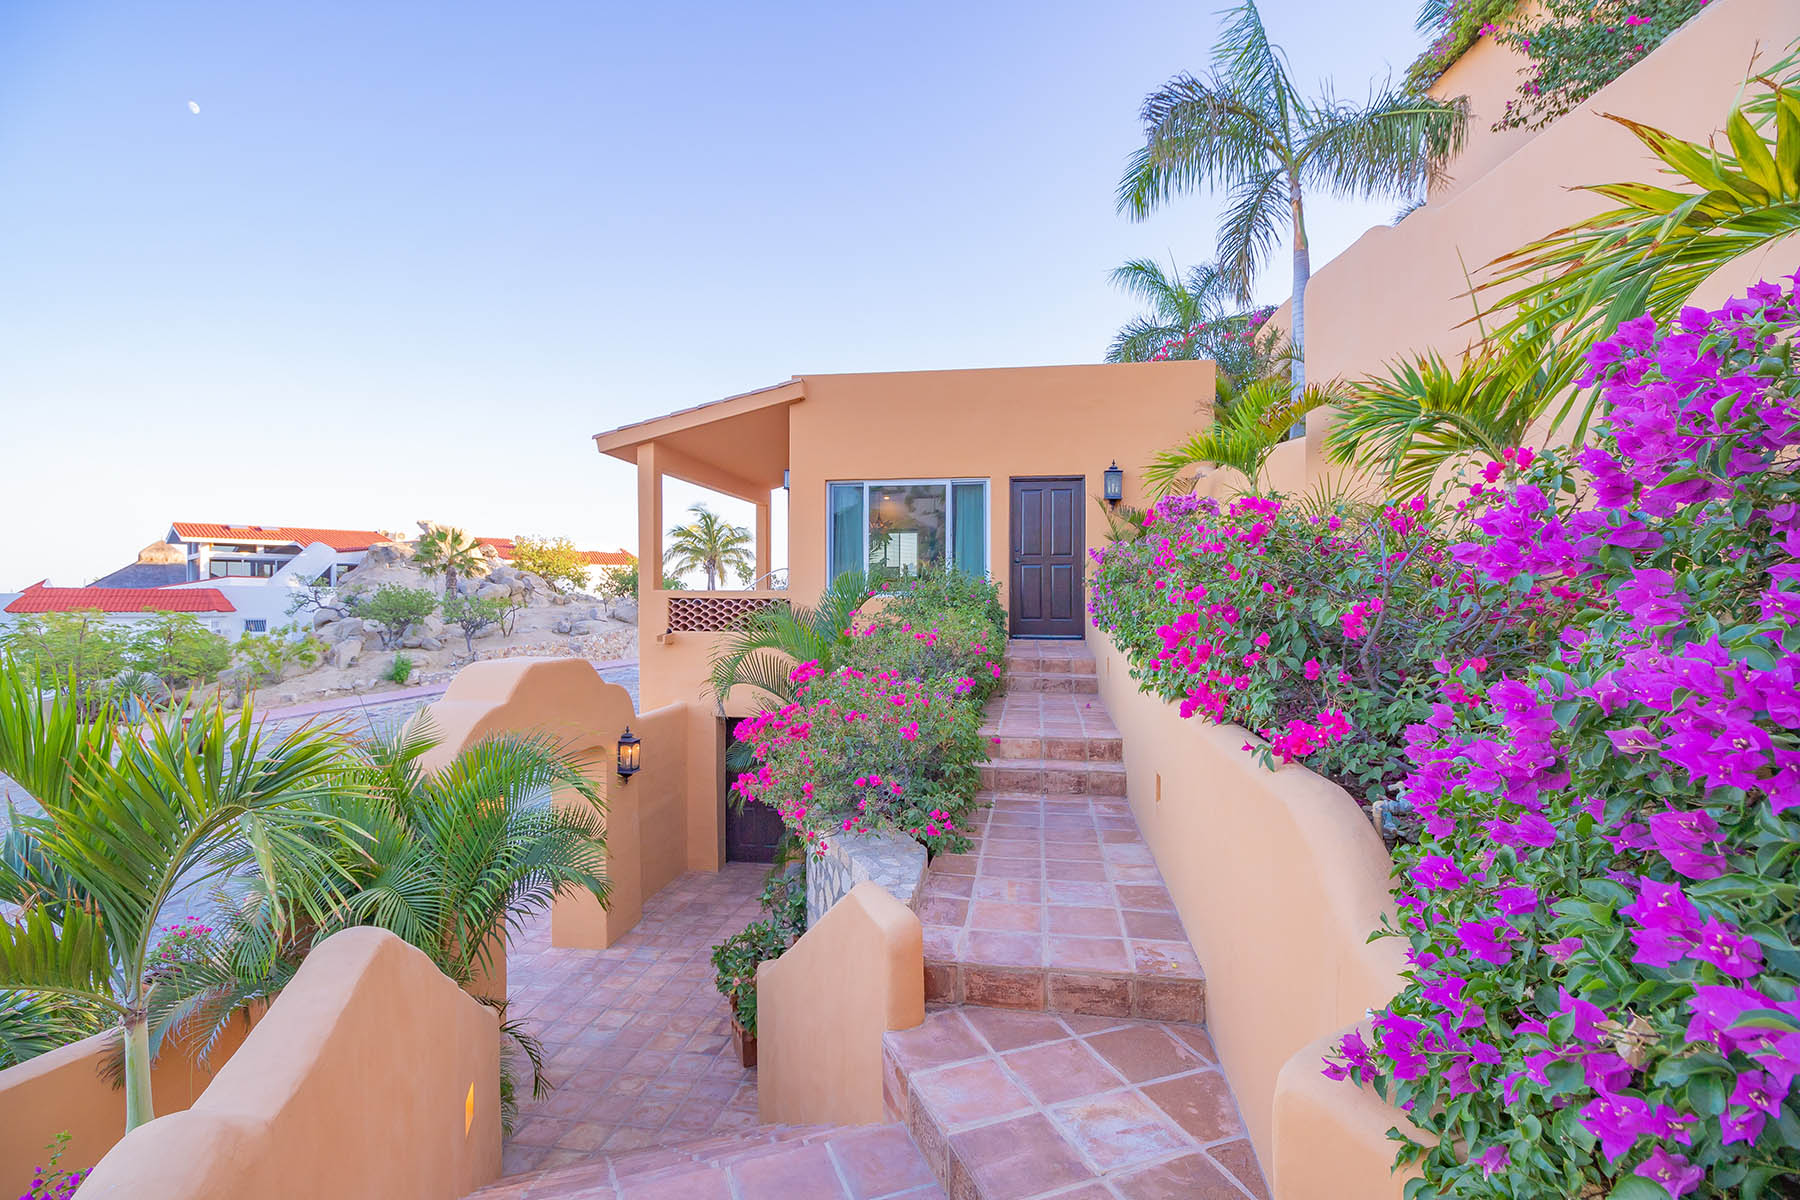 The Casita of a Luxury Resort-Style Villa in Cabo San Lucas, Mexico